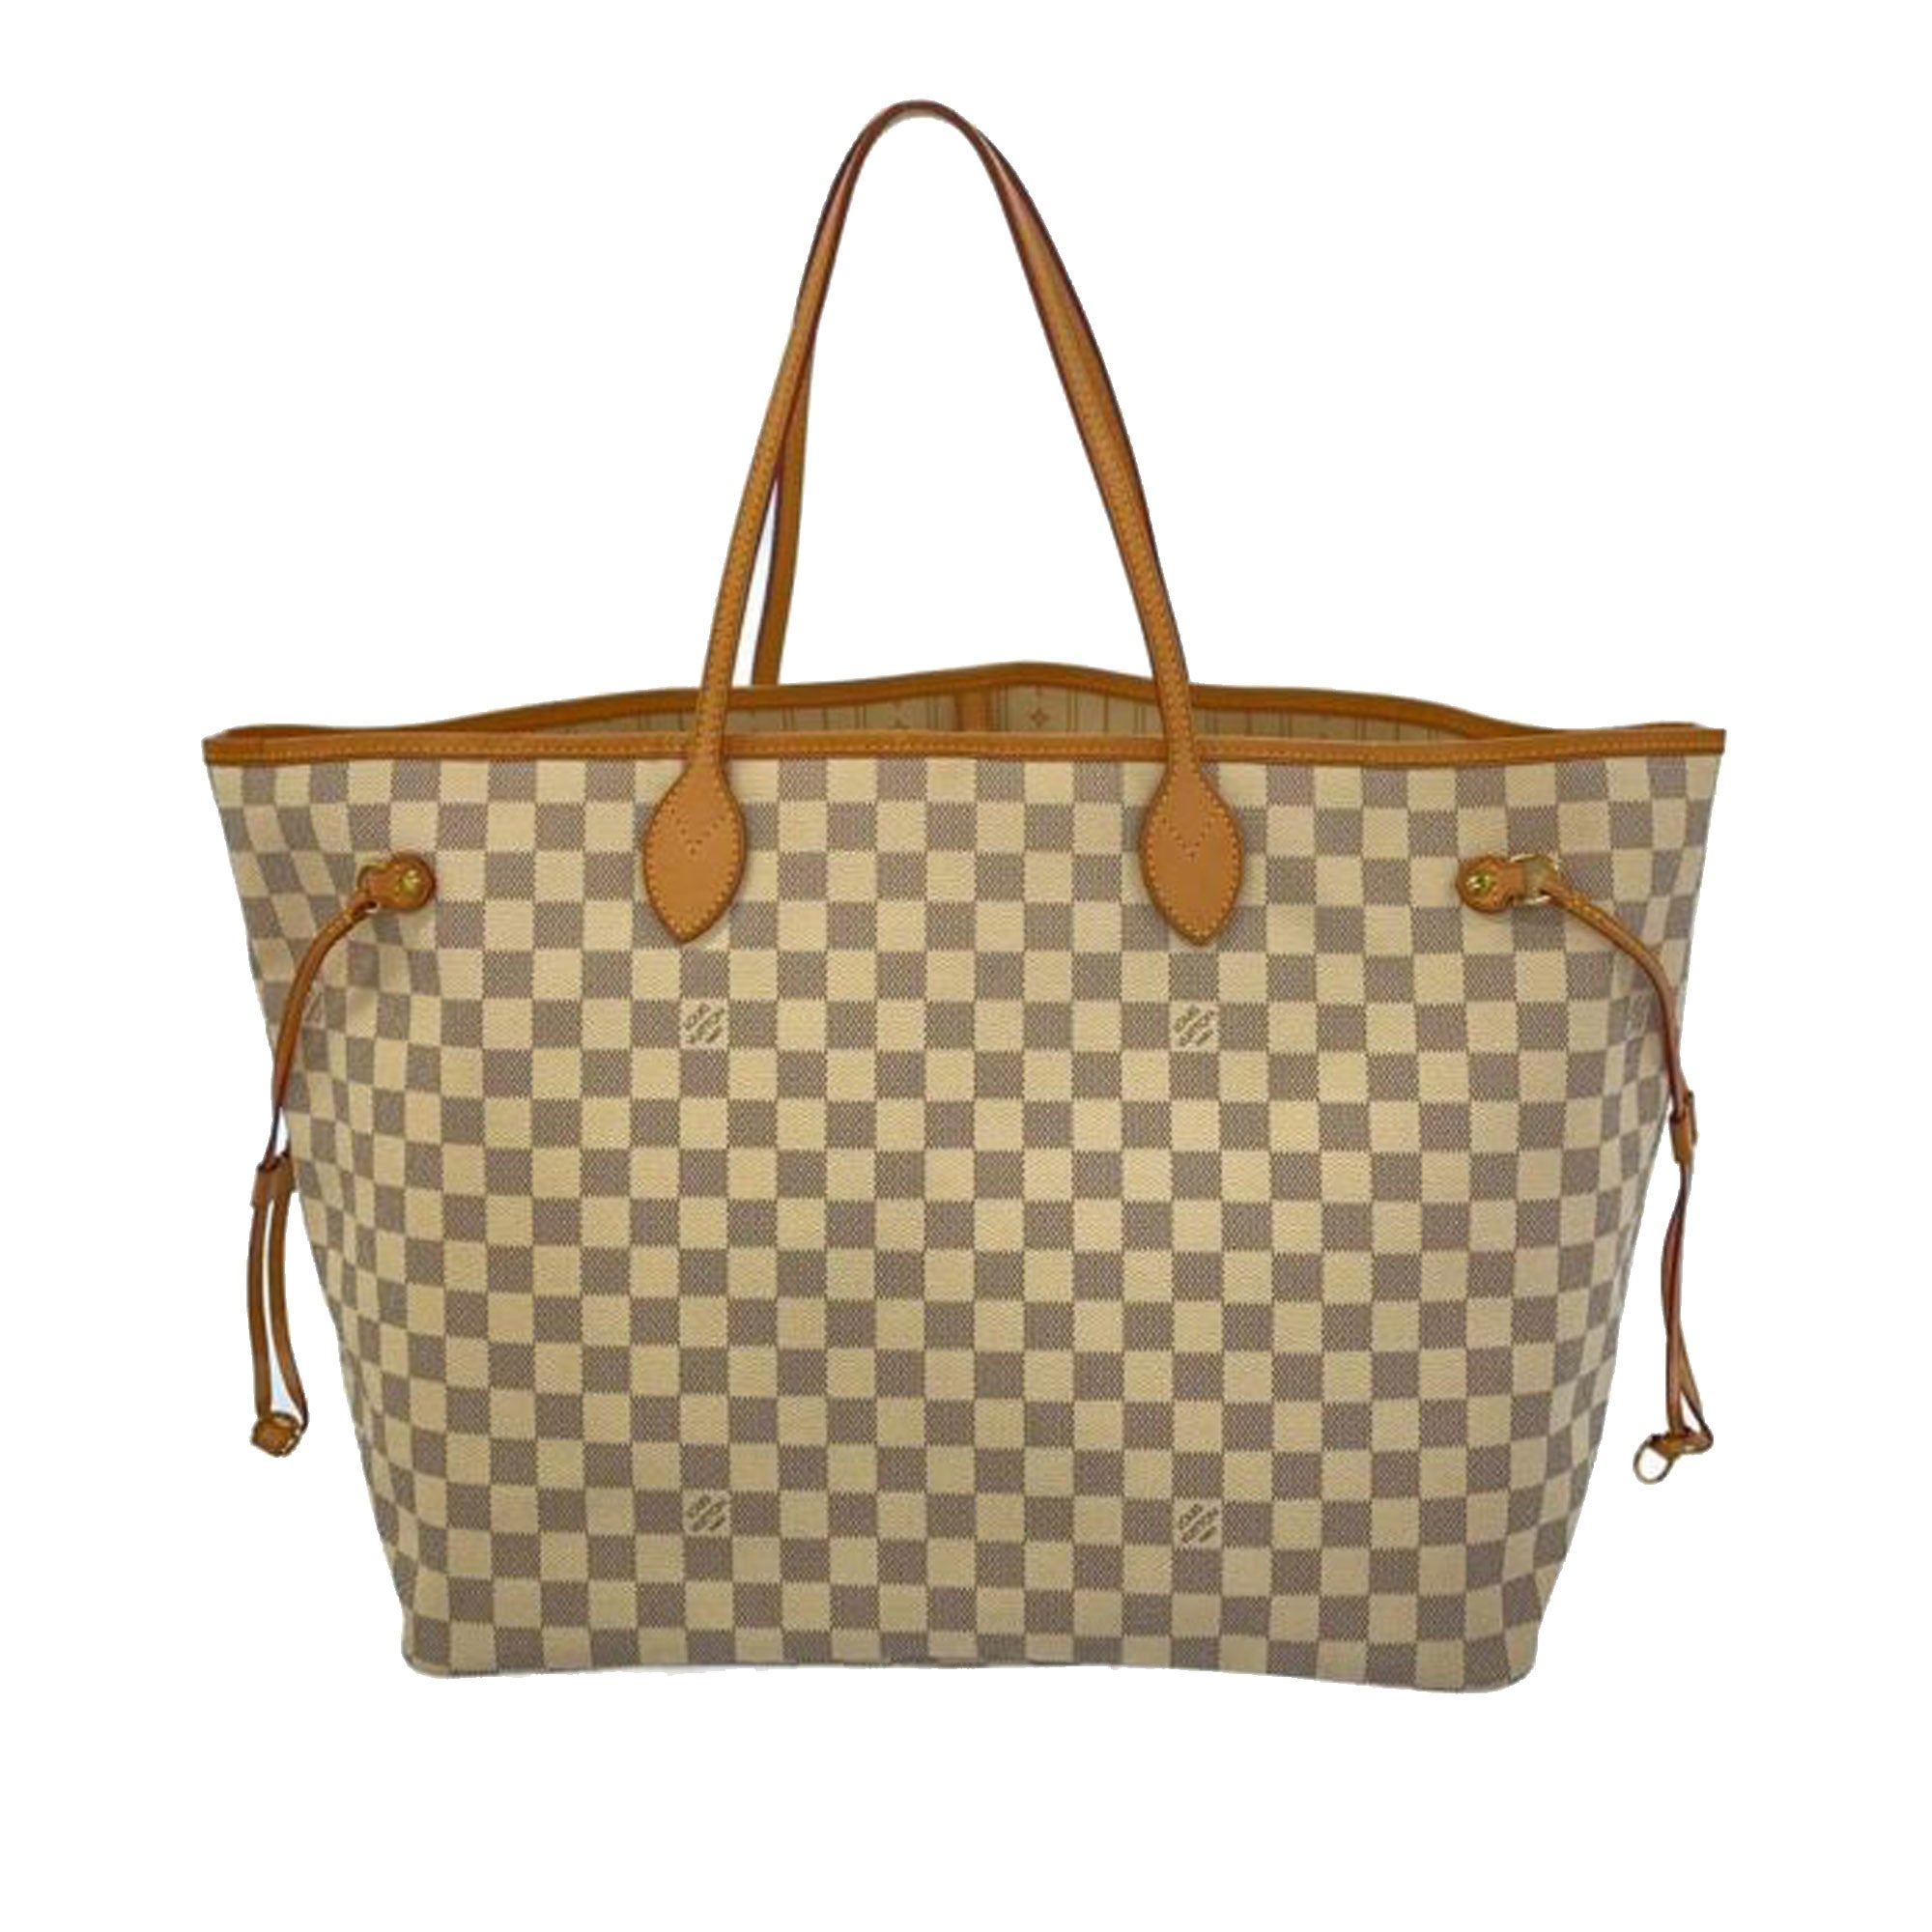 Leather Bag Trim Replacement: Louis Vuitton Neverfull Shoulder 